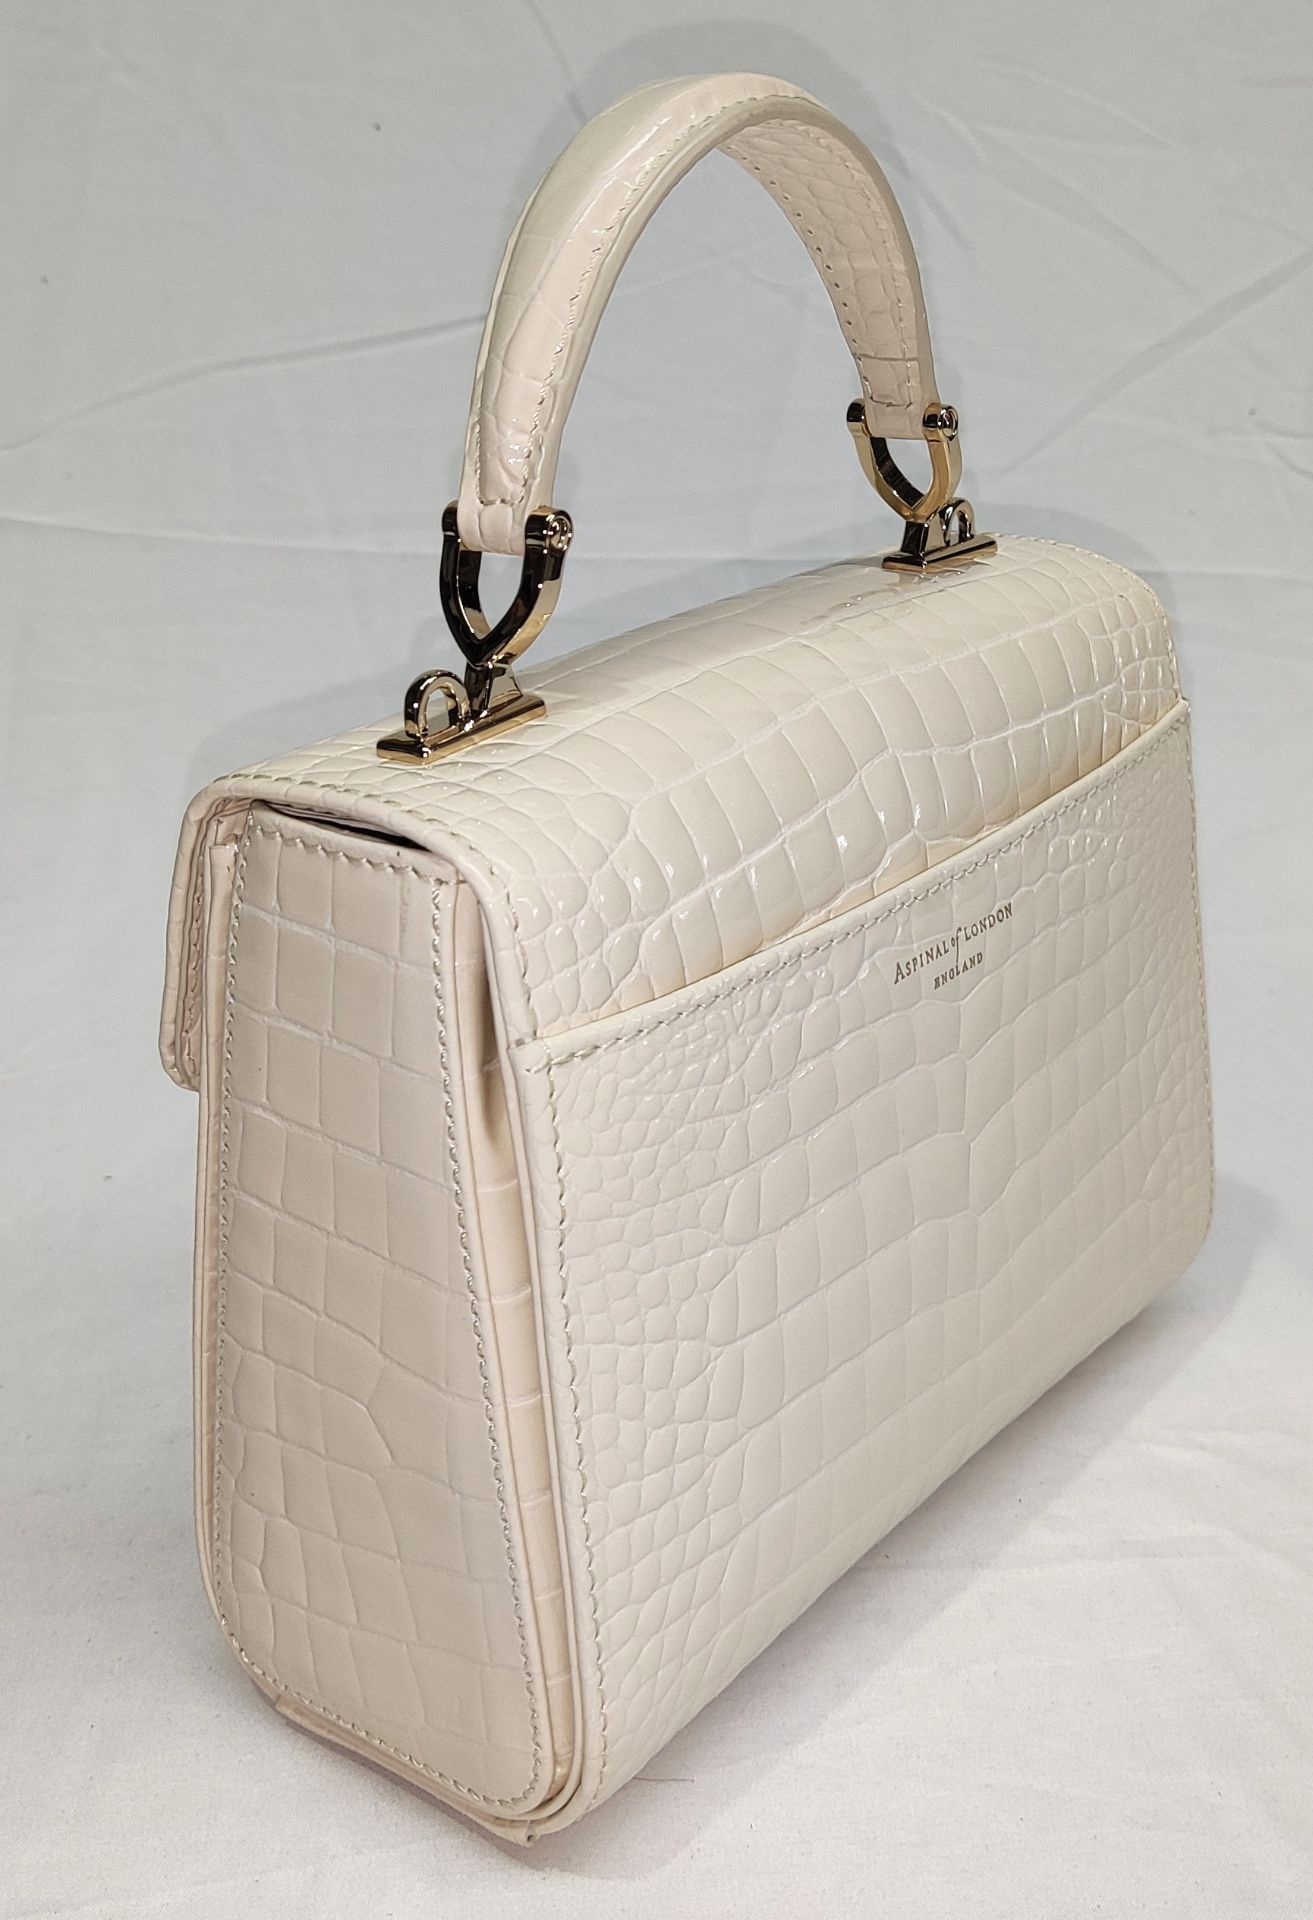 1 x ASPINAL OF LONDON Mayfair Midi Bag In Soft Taupe Patent Croc - Original RRP £595 - Ref: - Image 14 of 24